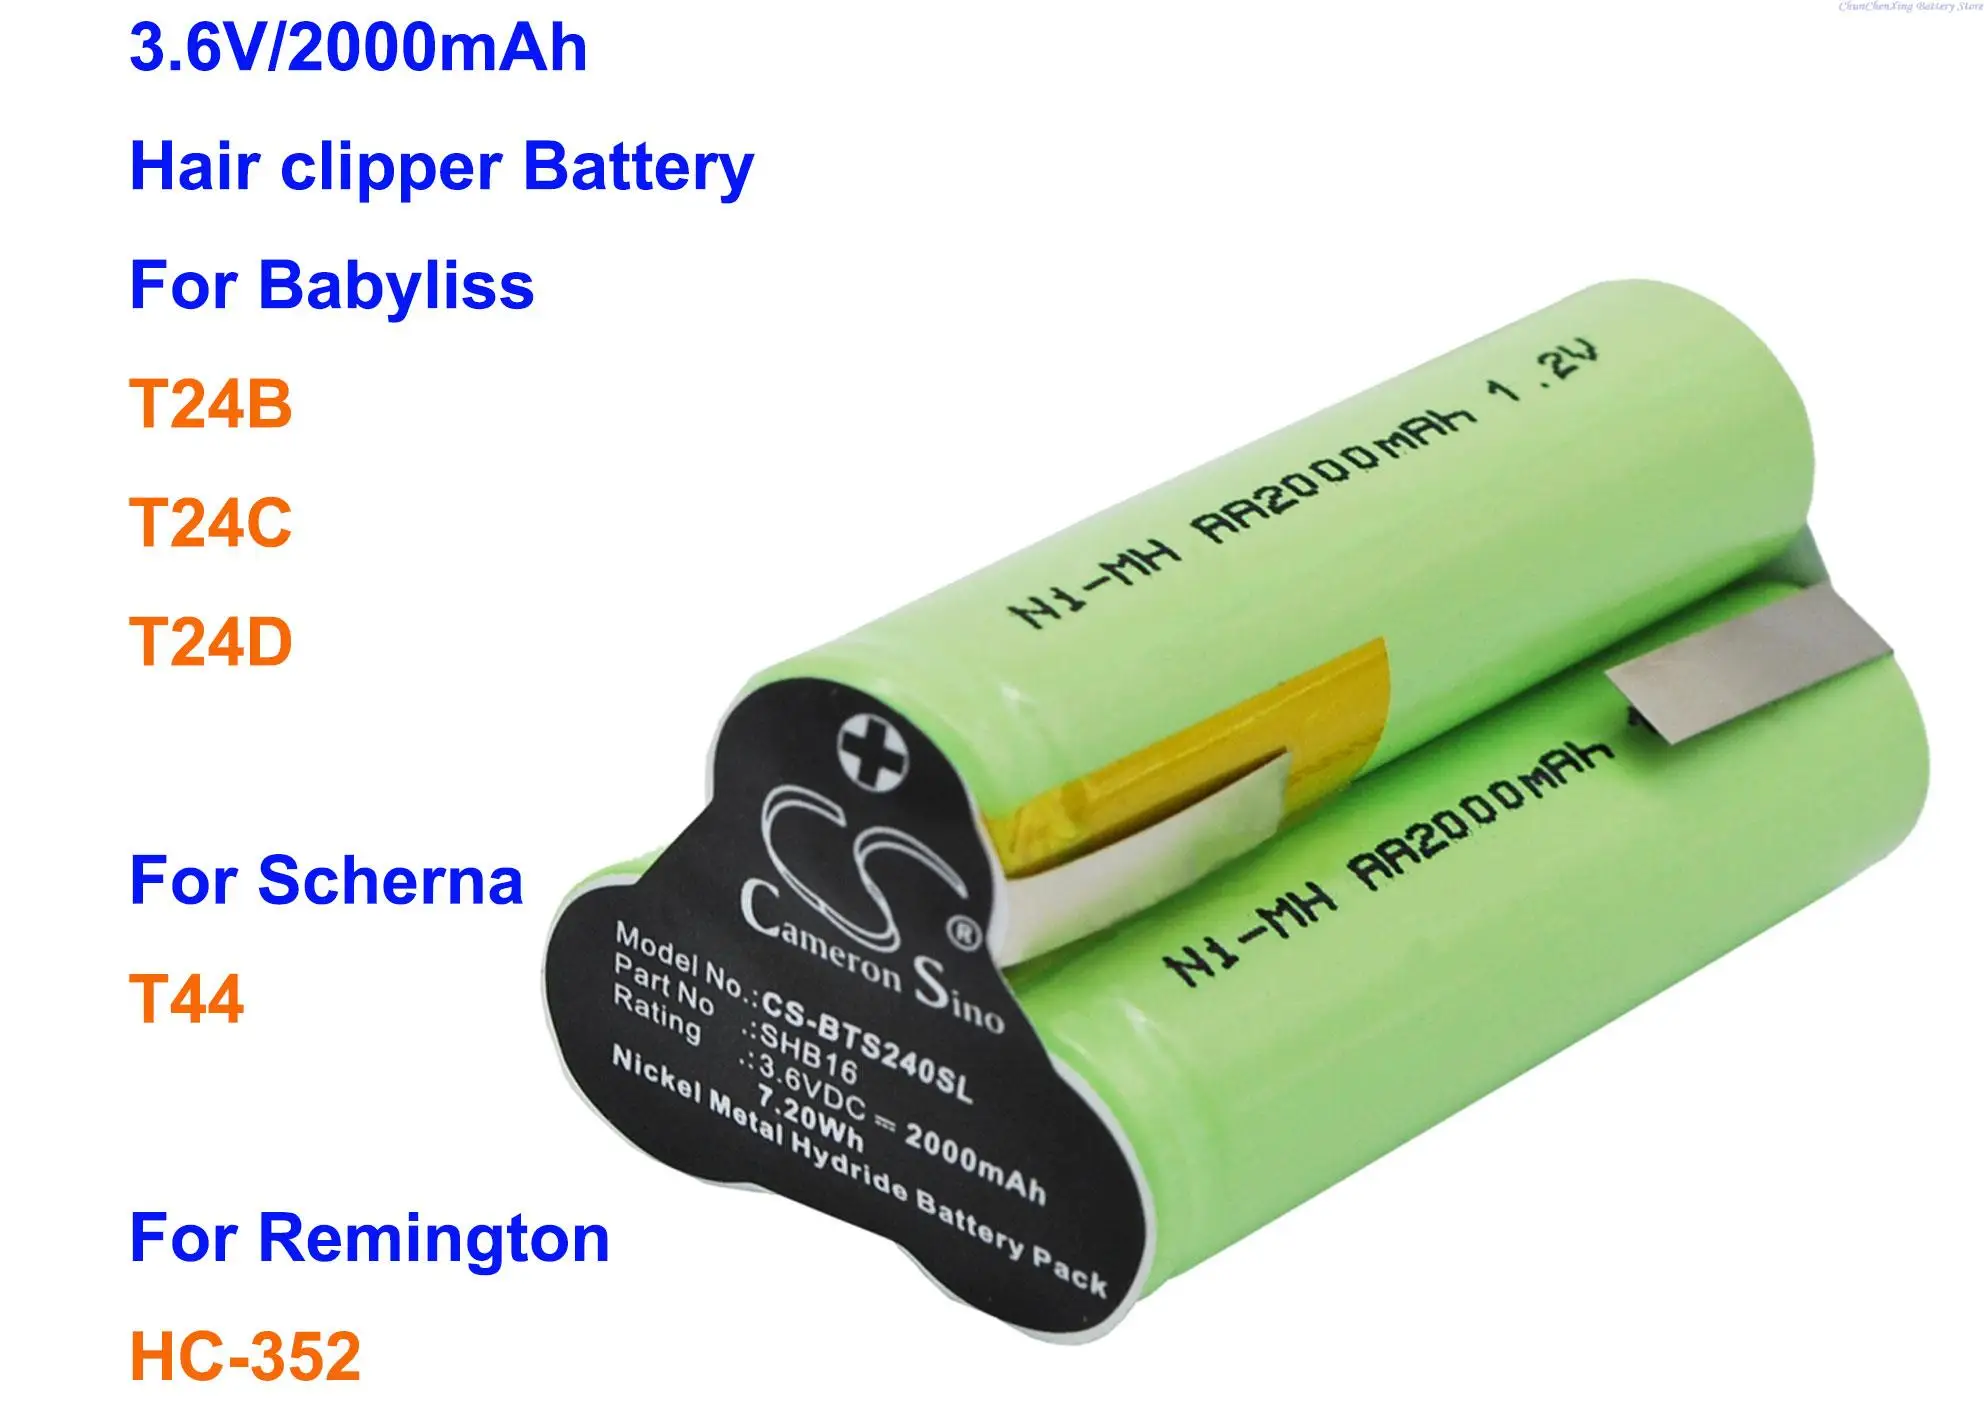 

OrangeYu 2000mAh Hair Clipper Battery SHB16 for Babyliss T24B, T24C, T24D, For REMINGTON HC-352, For SCHERNA T44